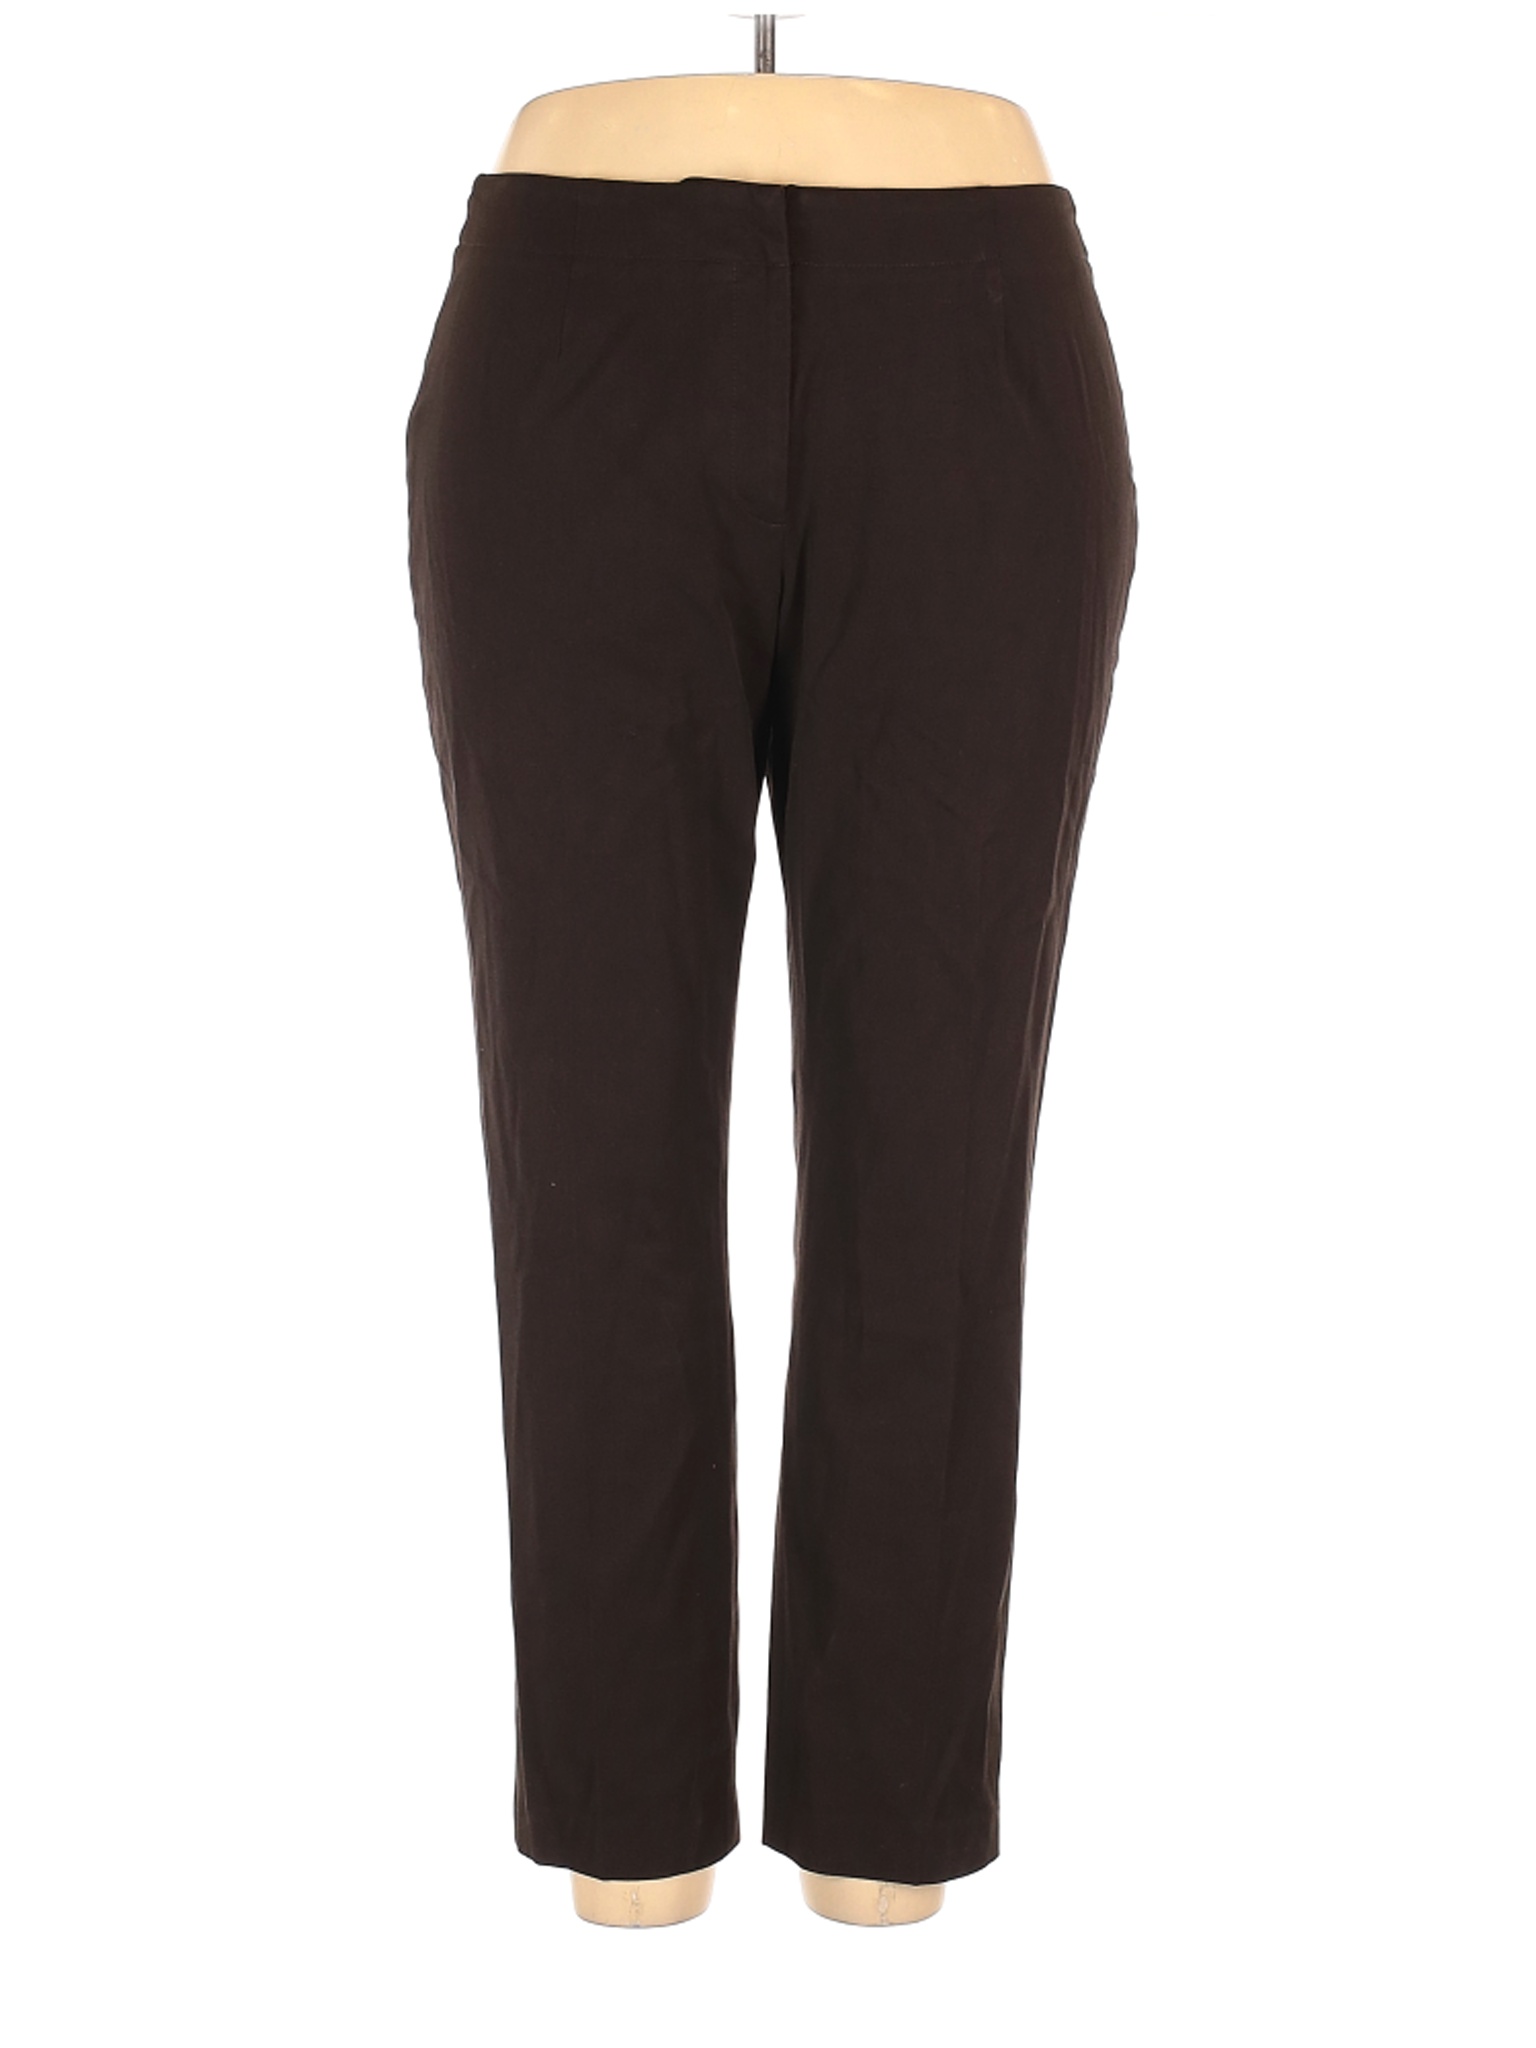 Talbots Women Brown Casual Pants 18 Plus | eBay